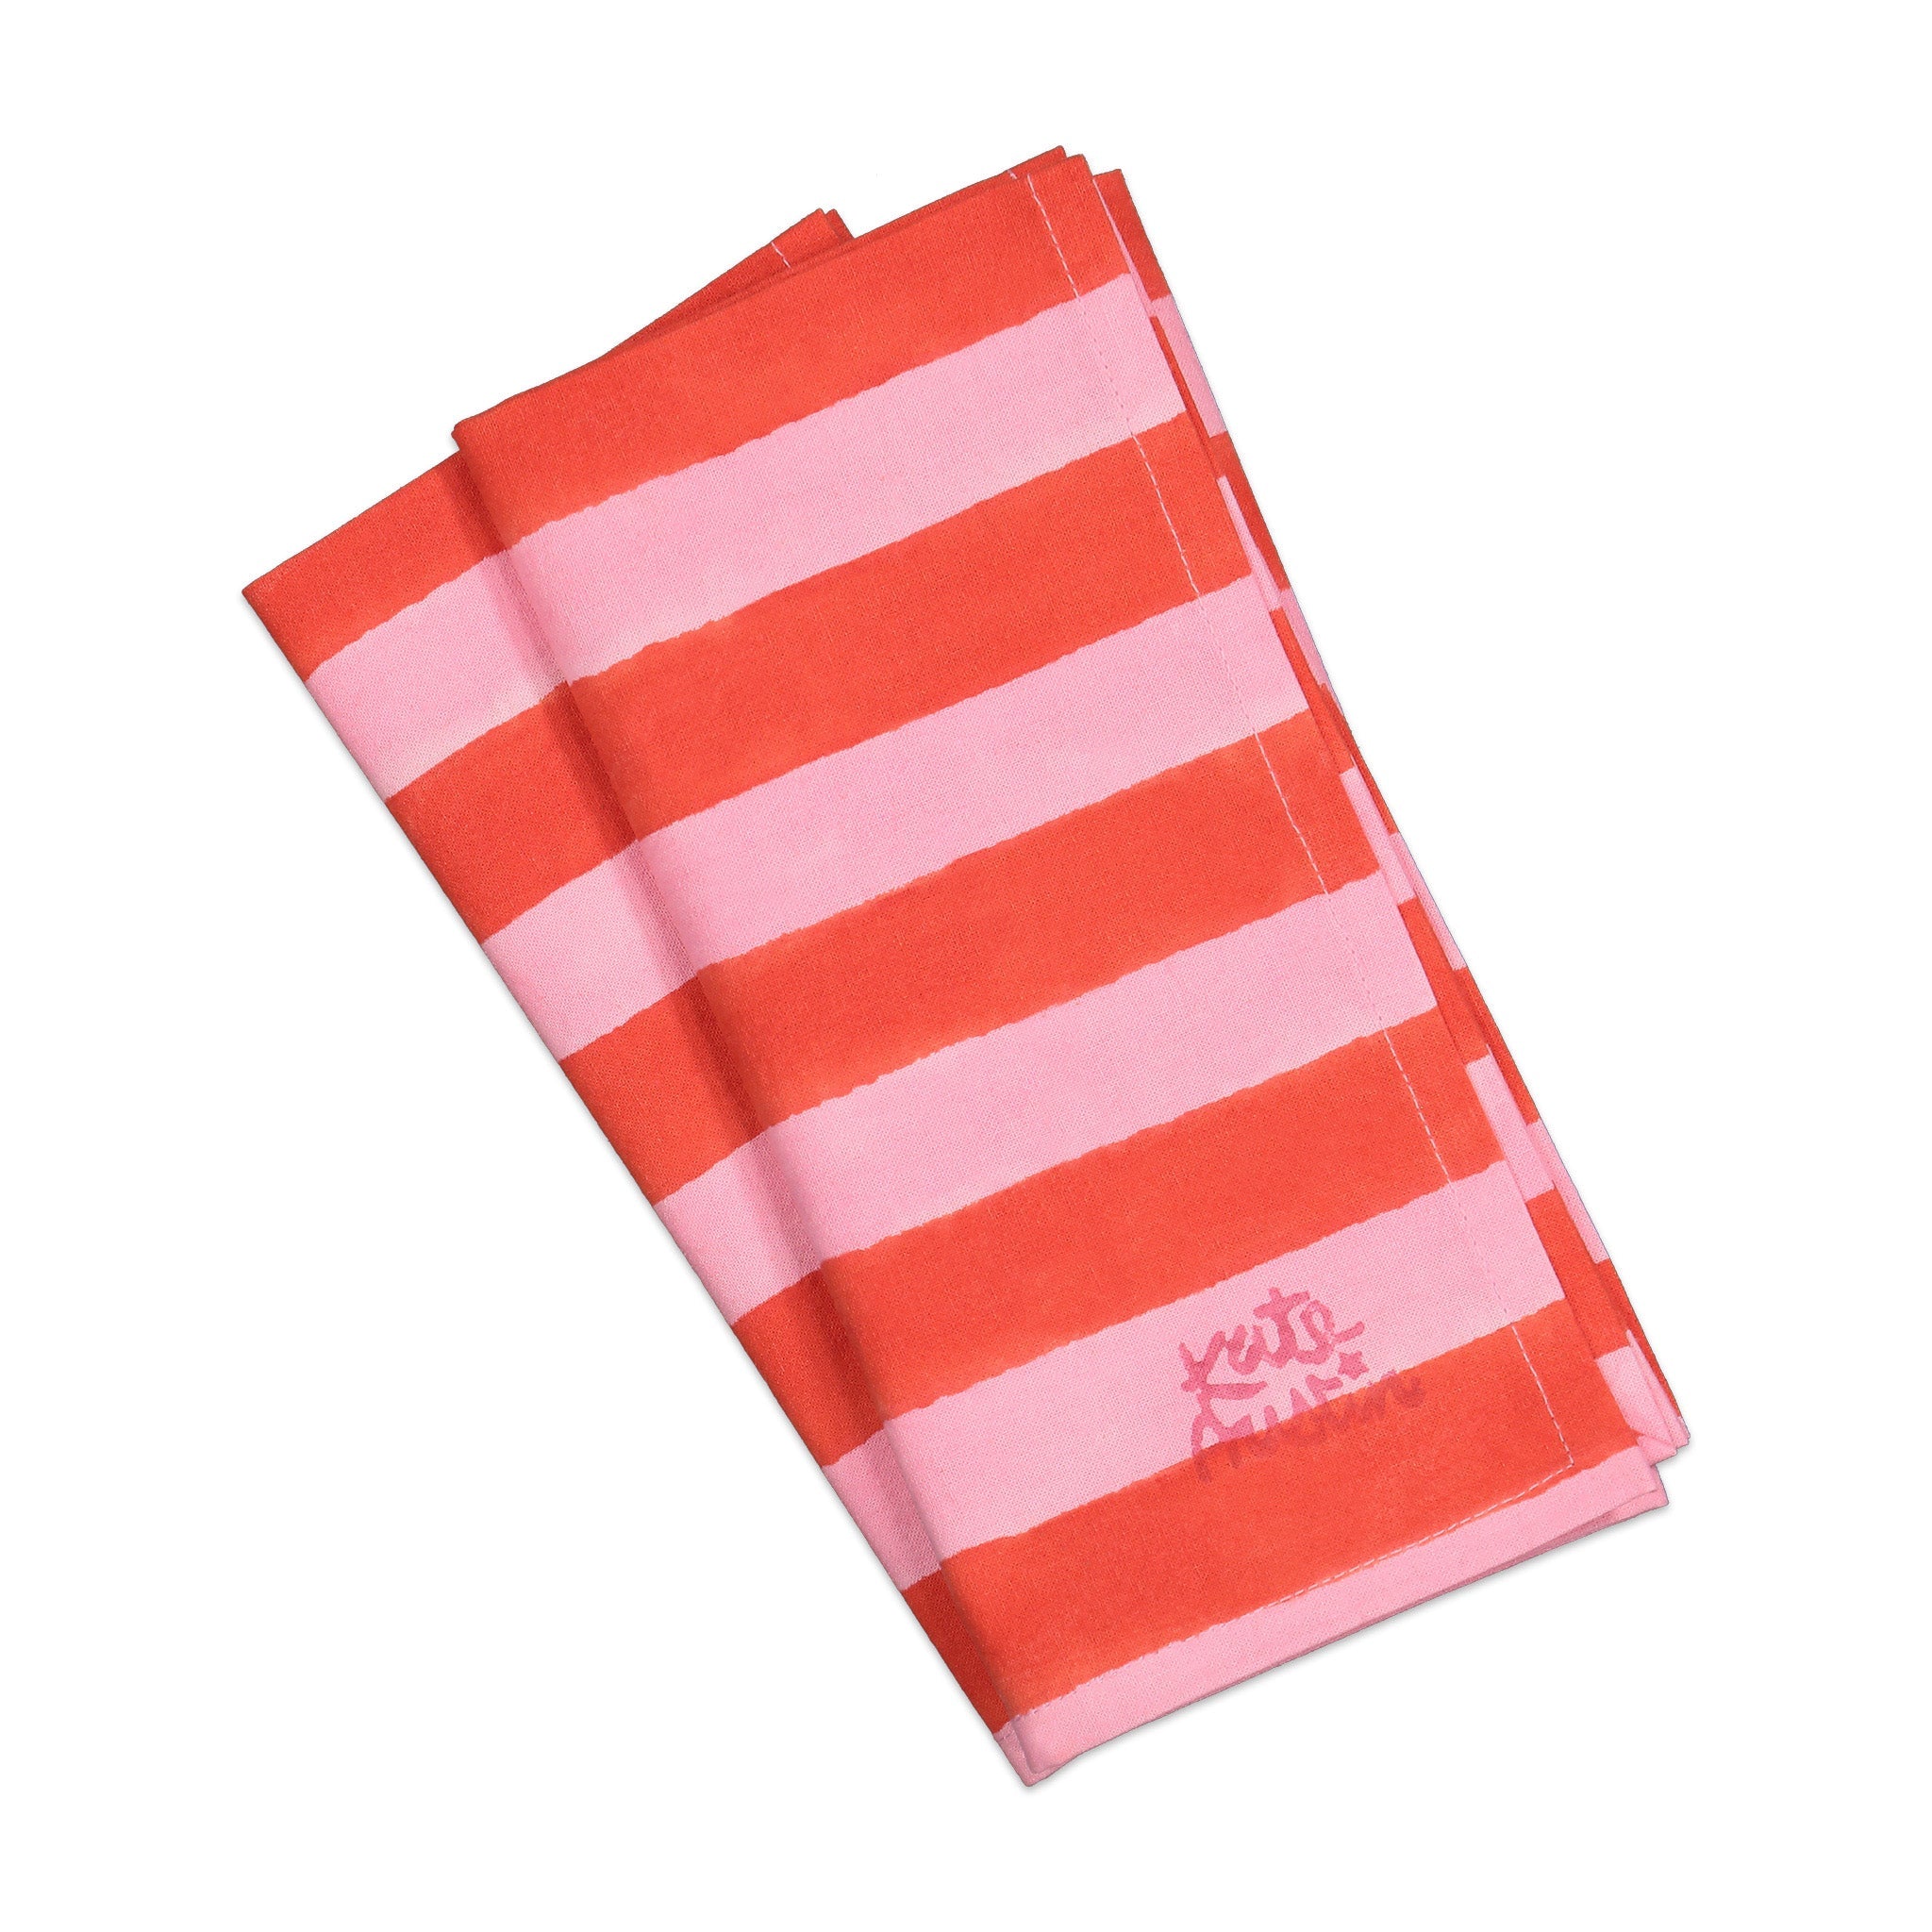 Cloth Napkin in Pink Orange Cabana Stripe - Set of 8